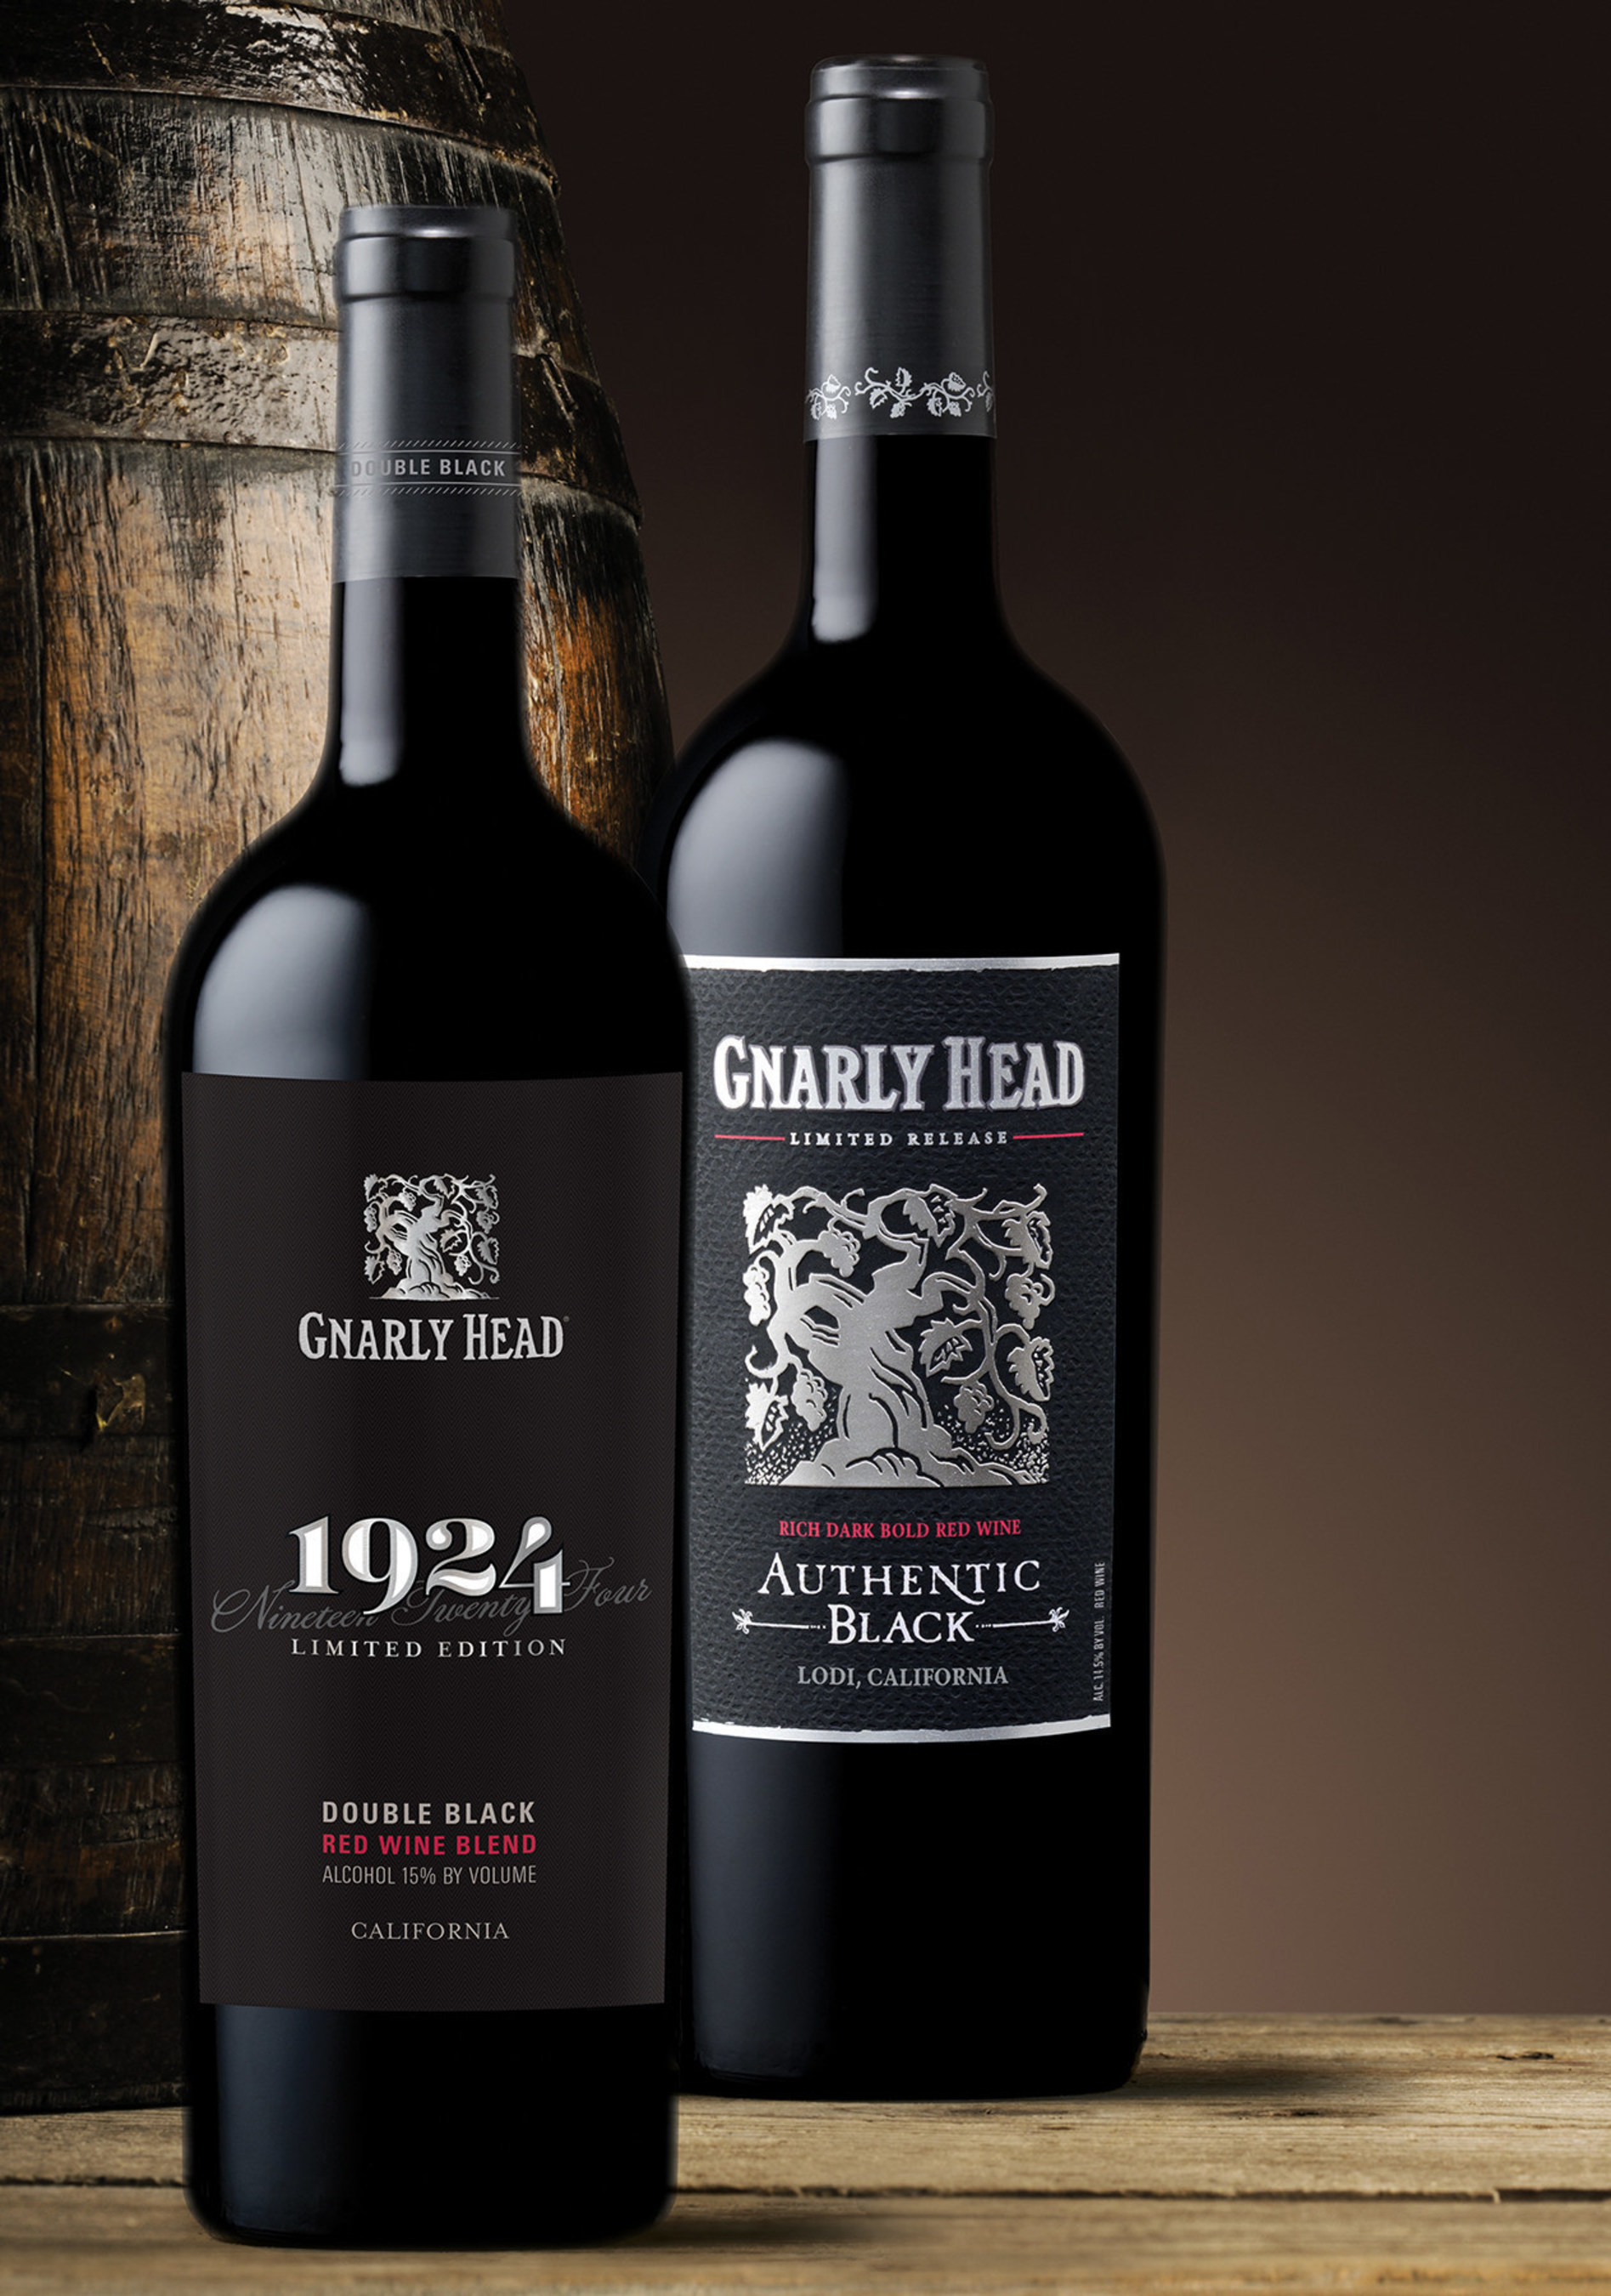 Холидей черное вино. Вино 1924 Double Black. 1924 Double Black вино Калифорния. Gnarly head вино. Вино 1924 Double Black Limited Edition.